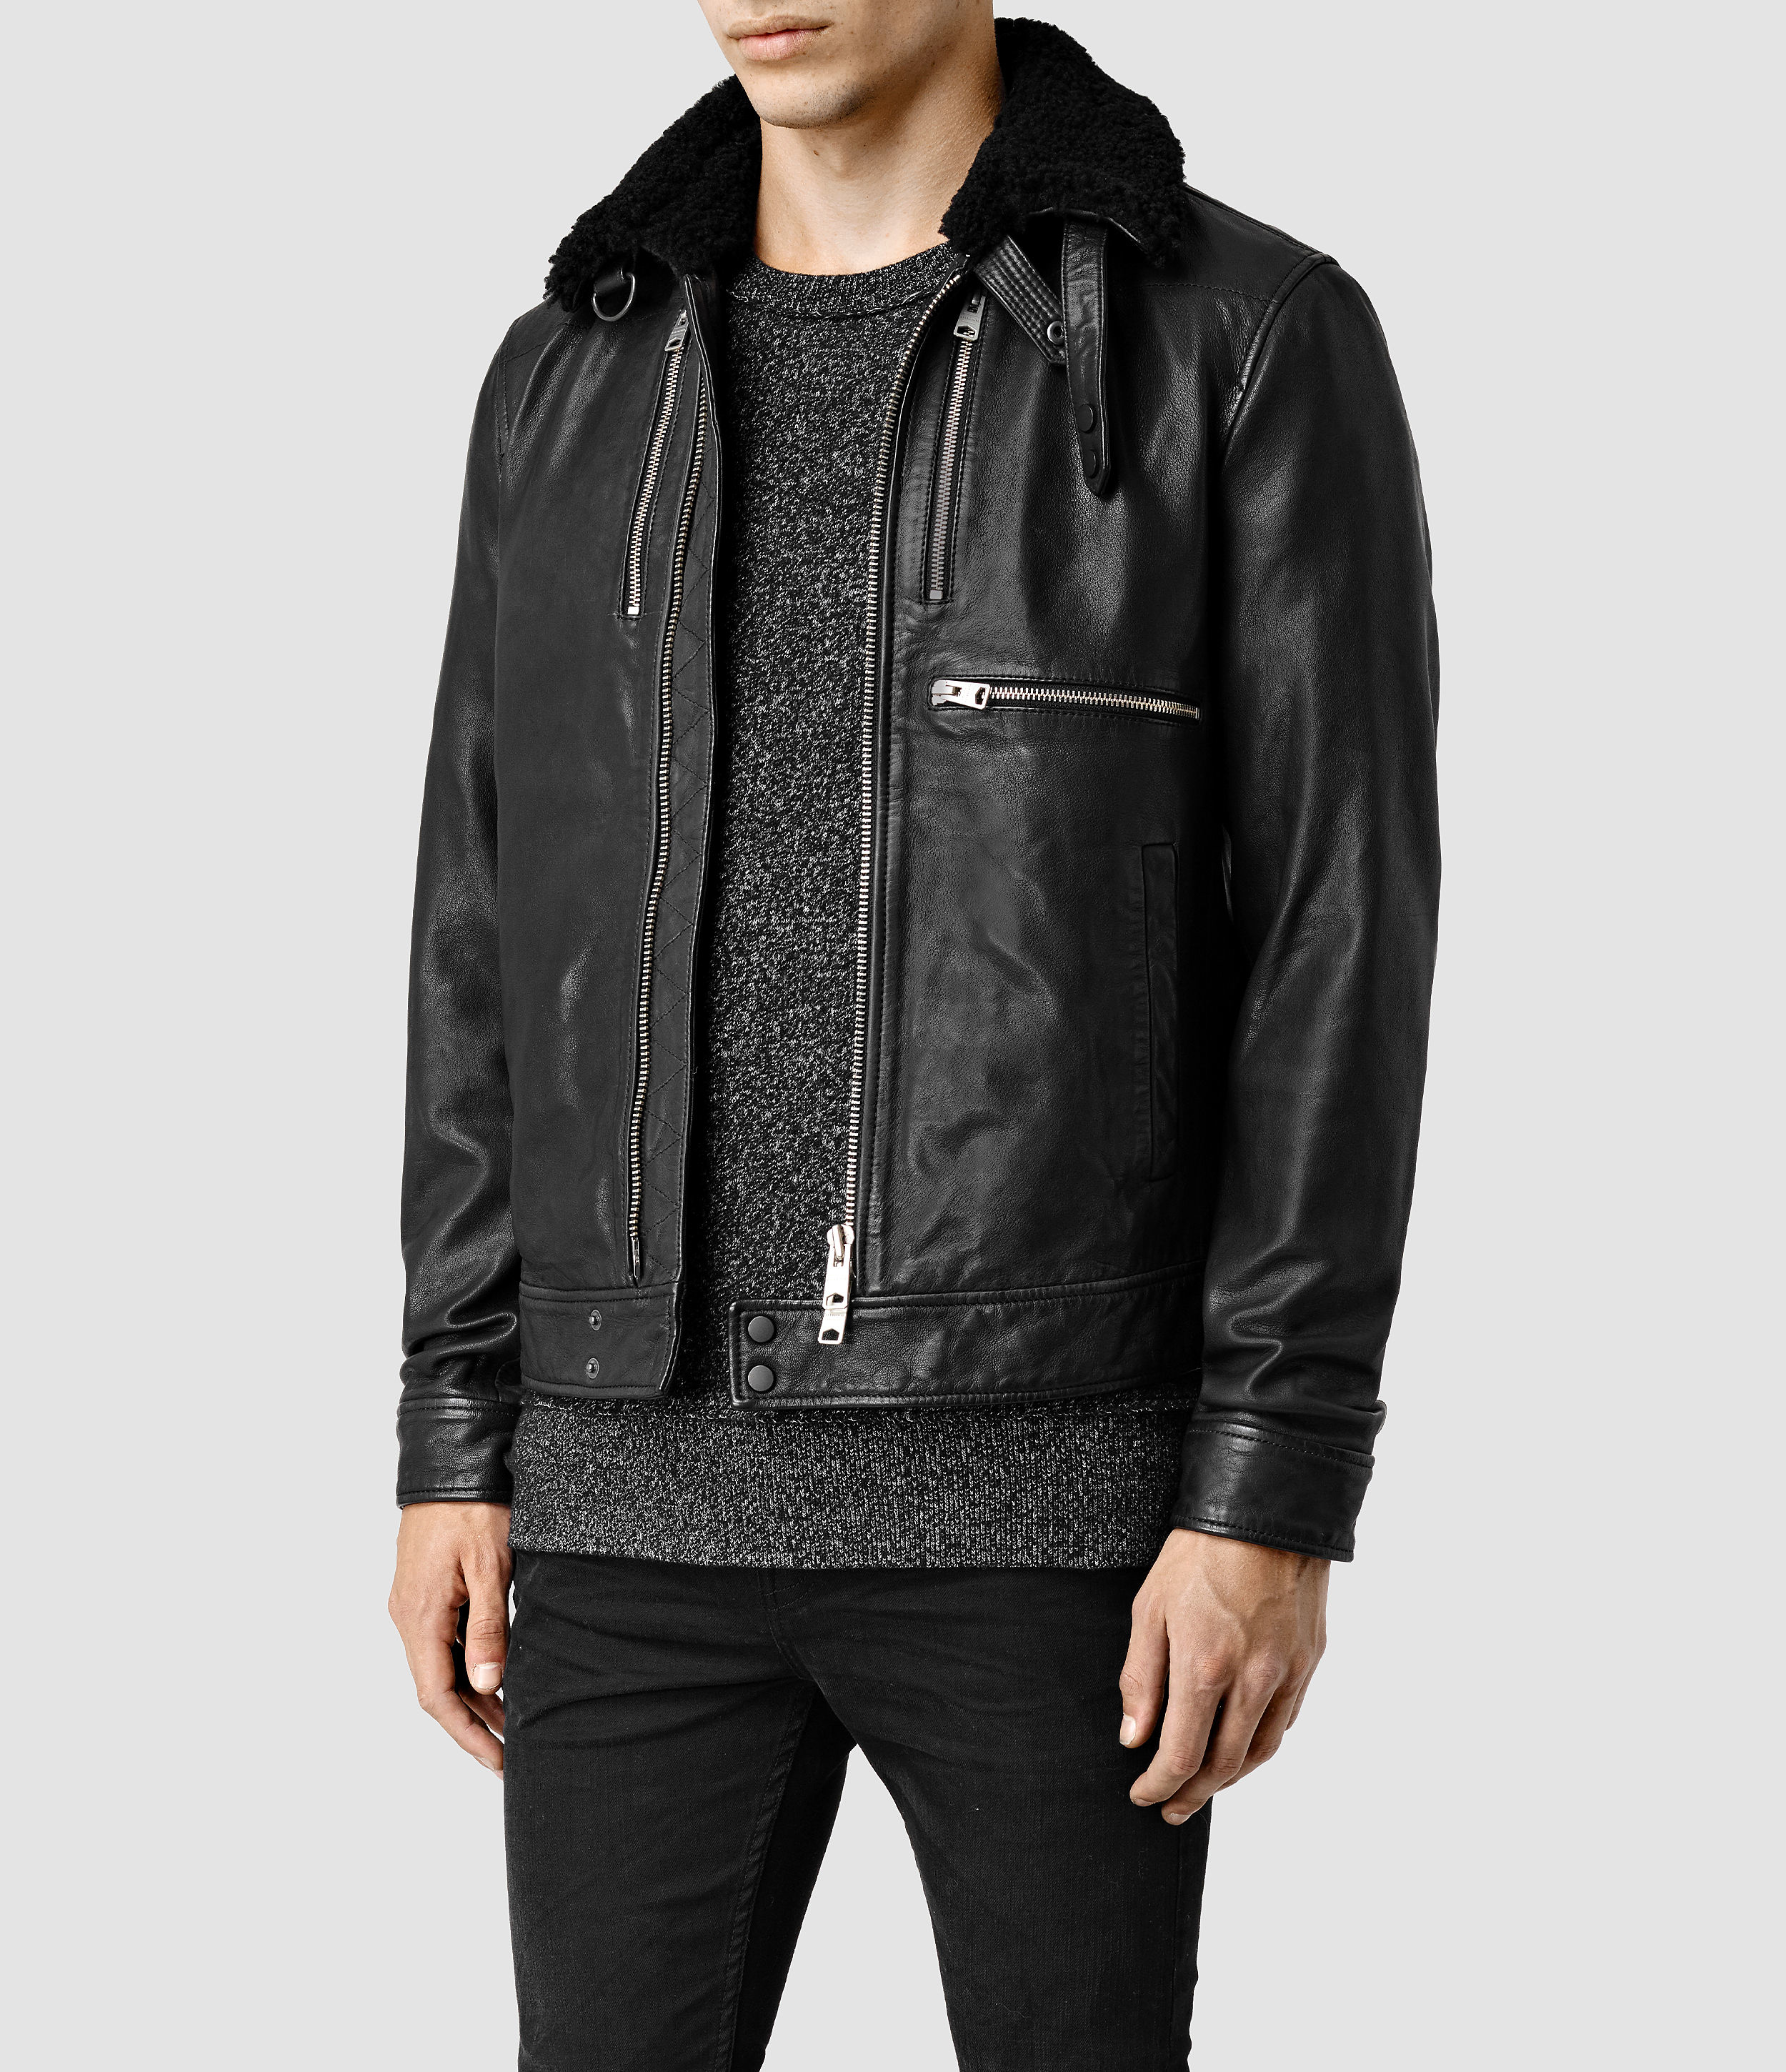 AllSaints Benson Leather Jacket in Black for Men - Lyst